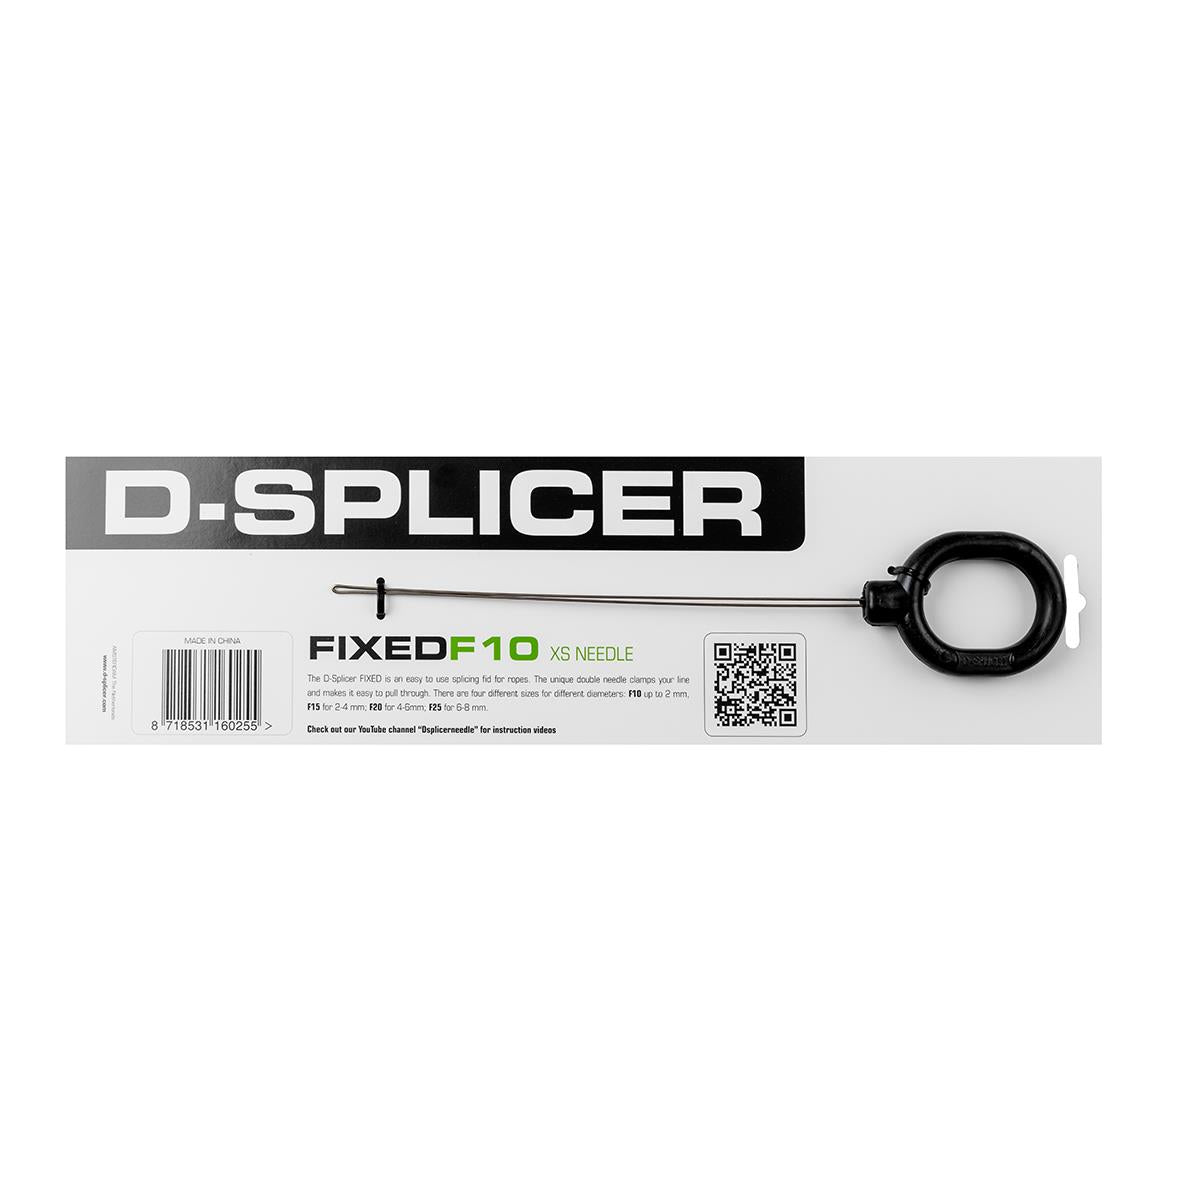 D Splicer Splicing Needle - Very Small F10